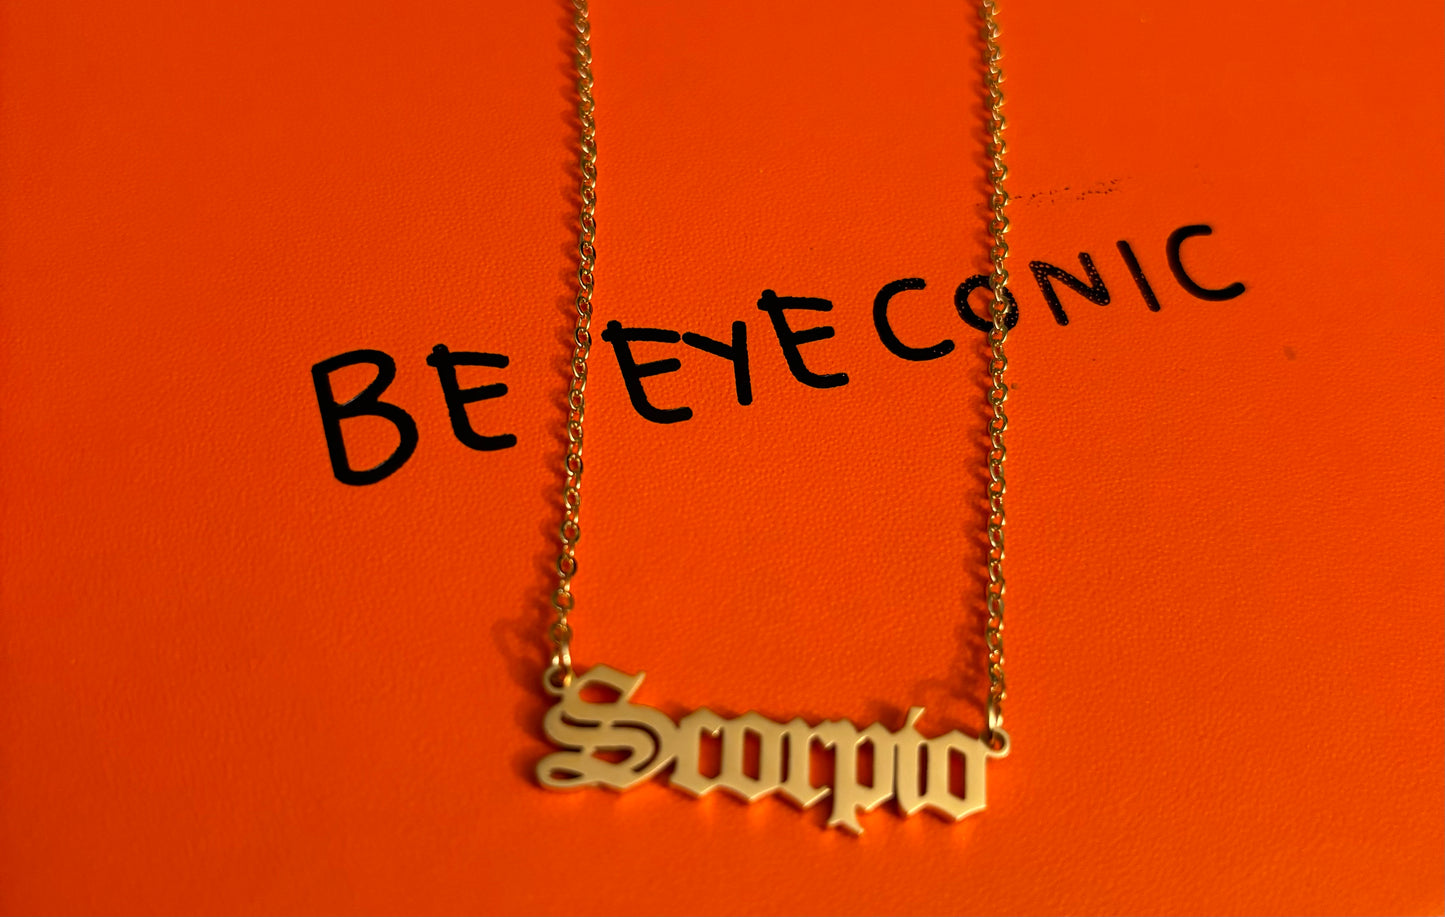 BeEyeConic “Zodiac” Name Chain